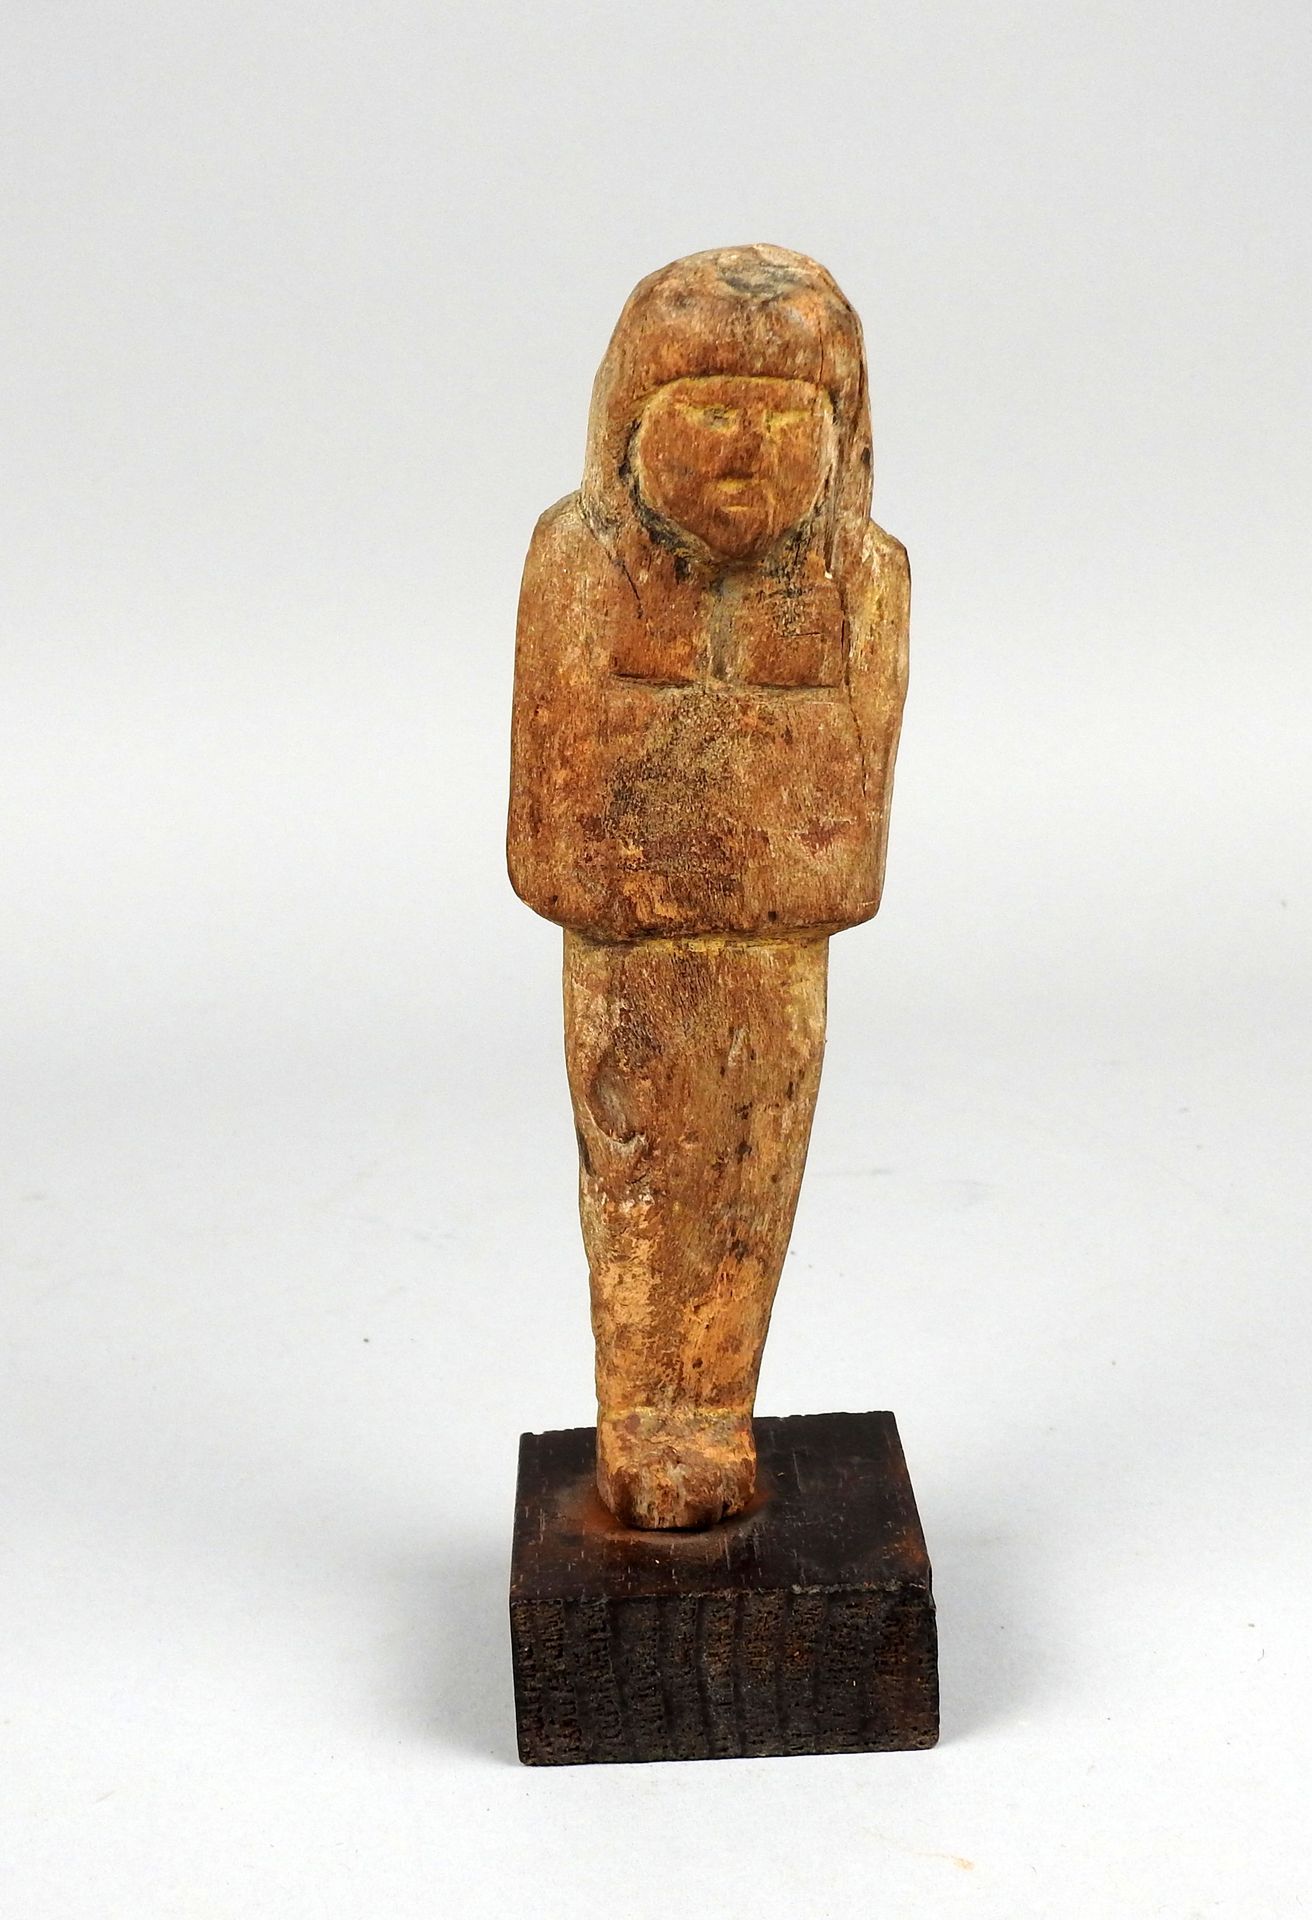 Null 大的Shaouabti，假发上有精细的标记，有多色的痕迹

木材 16.8厘米

古埃及可能是新王国